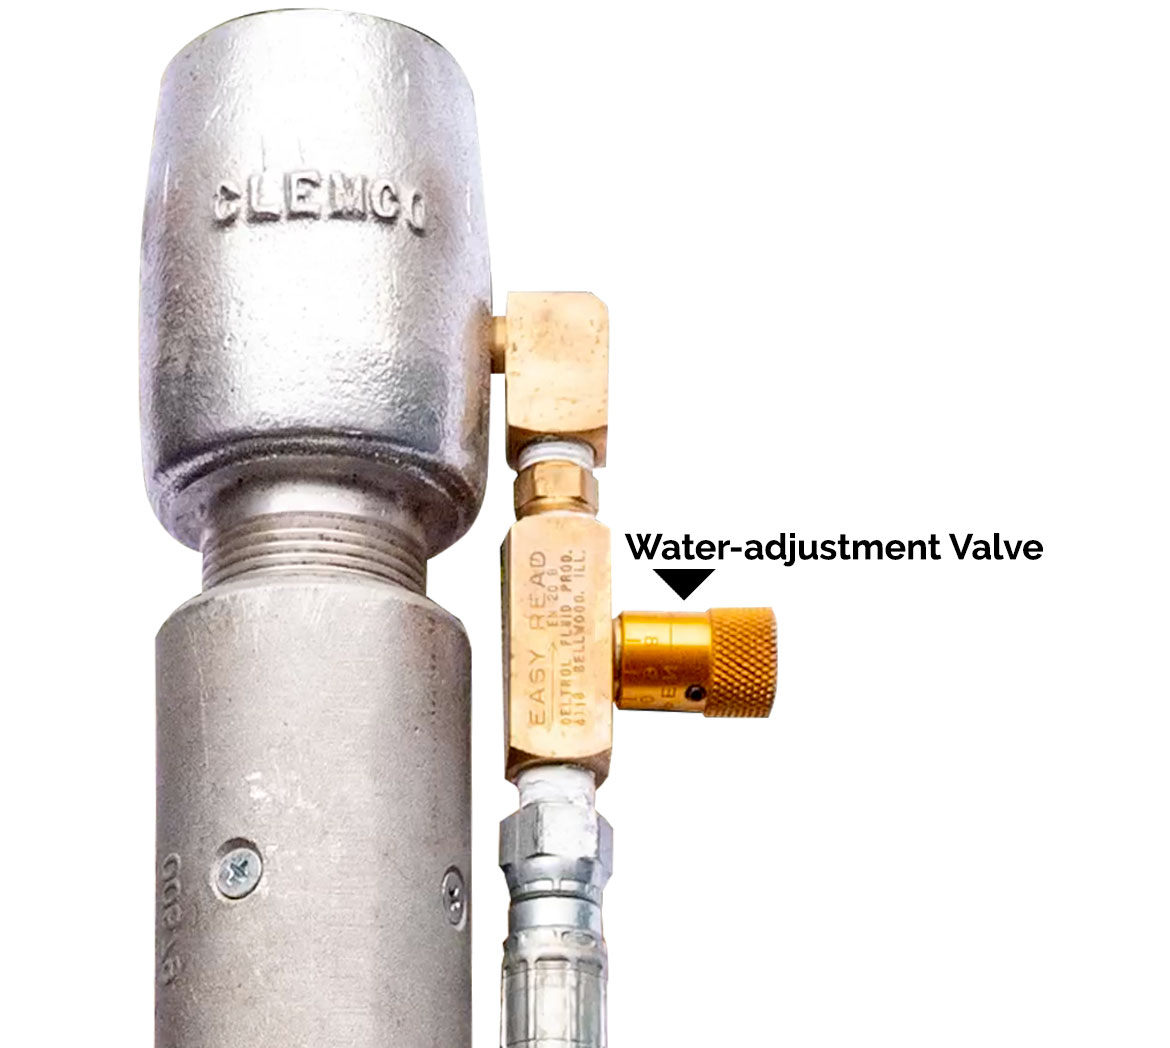 Water-adjustment valve